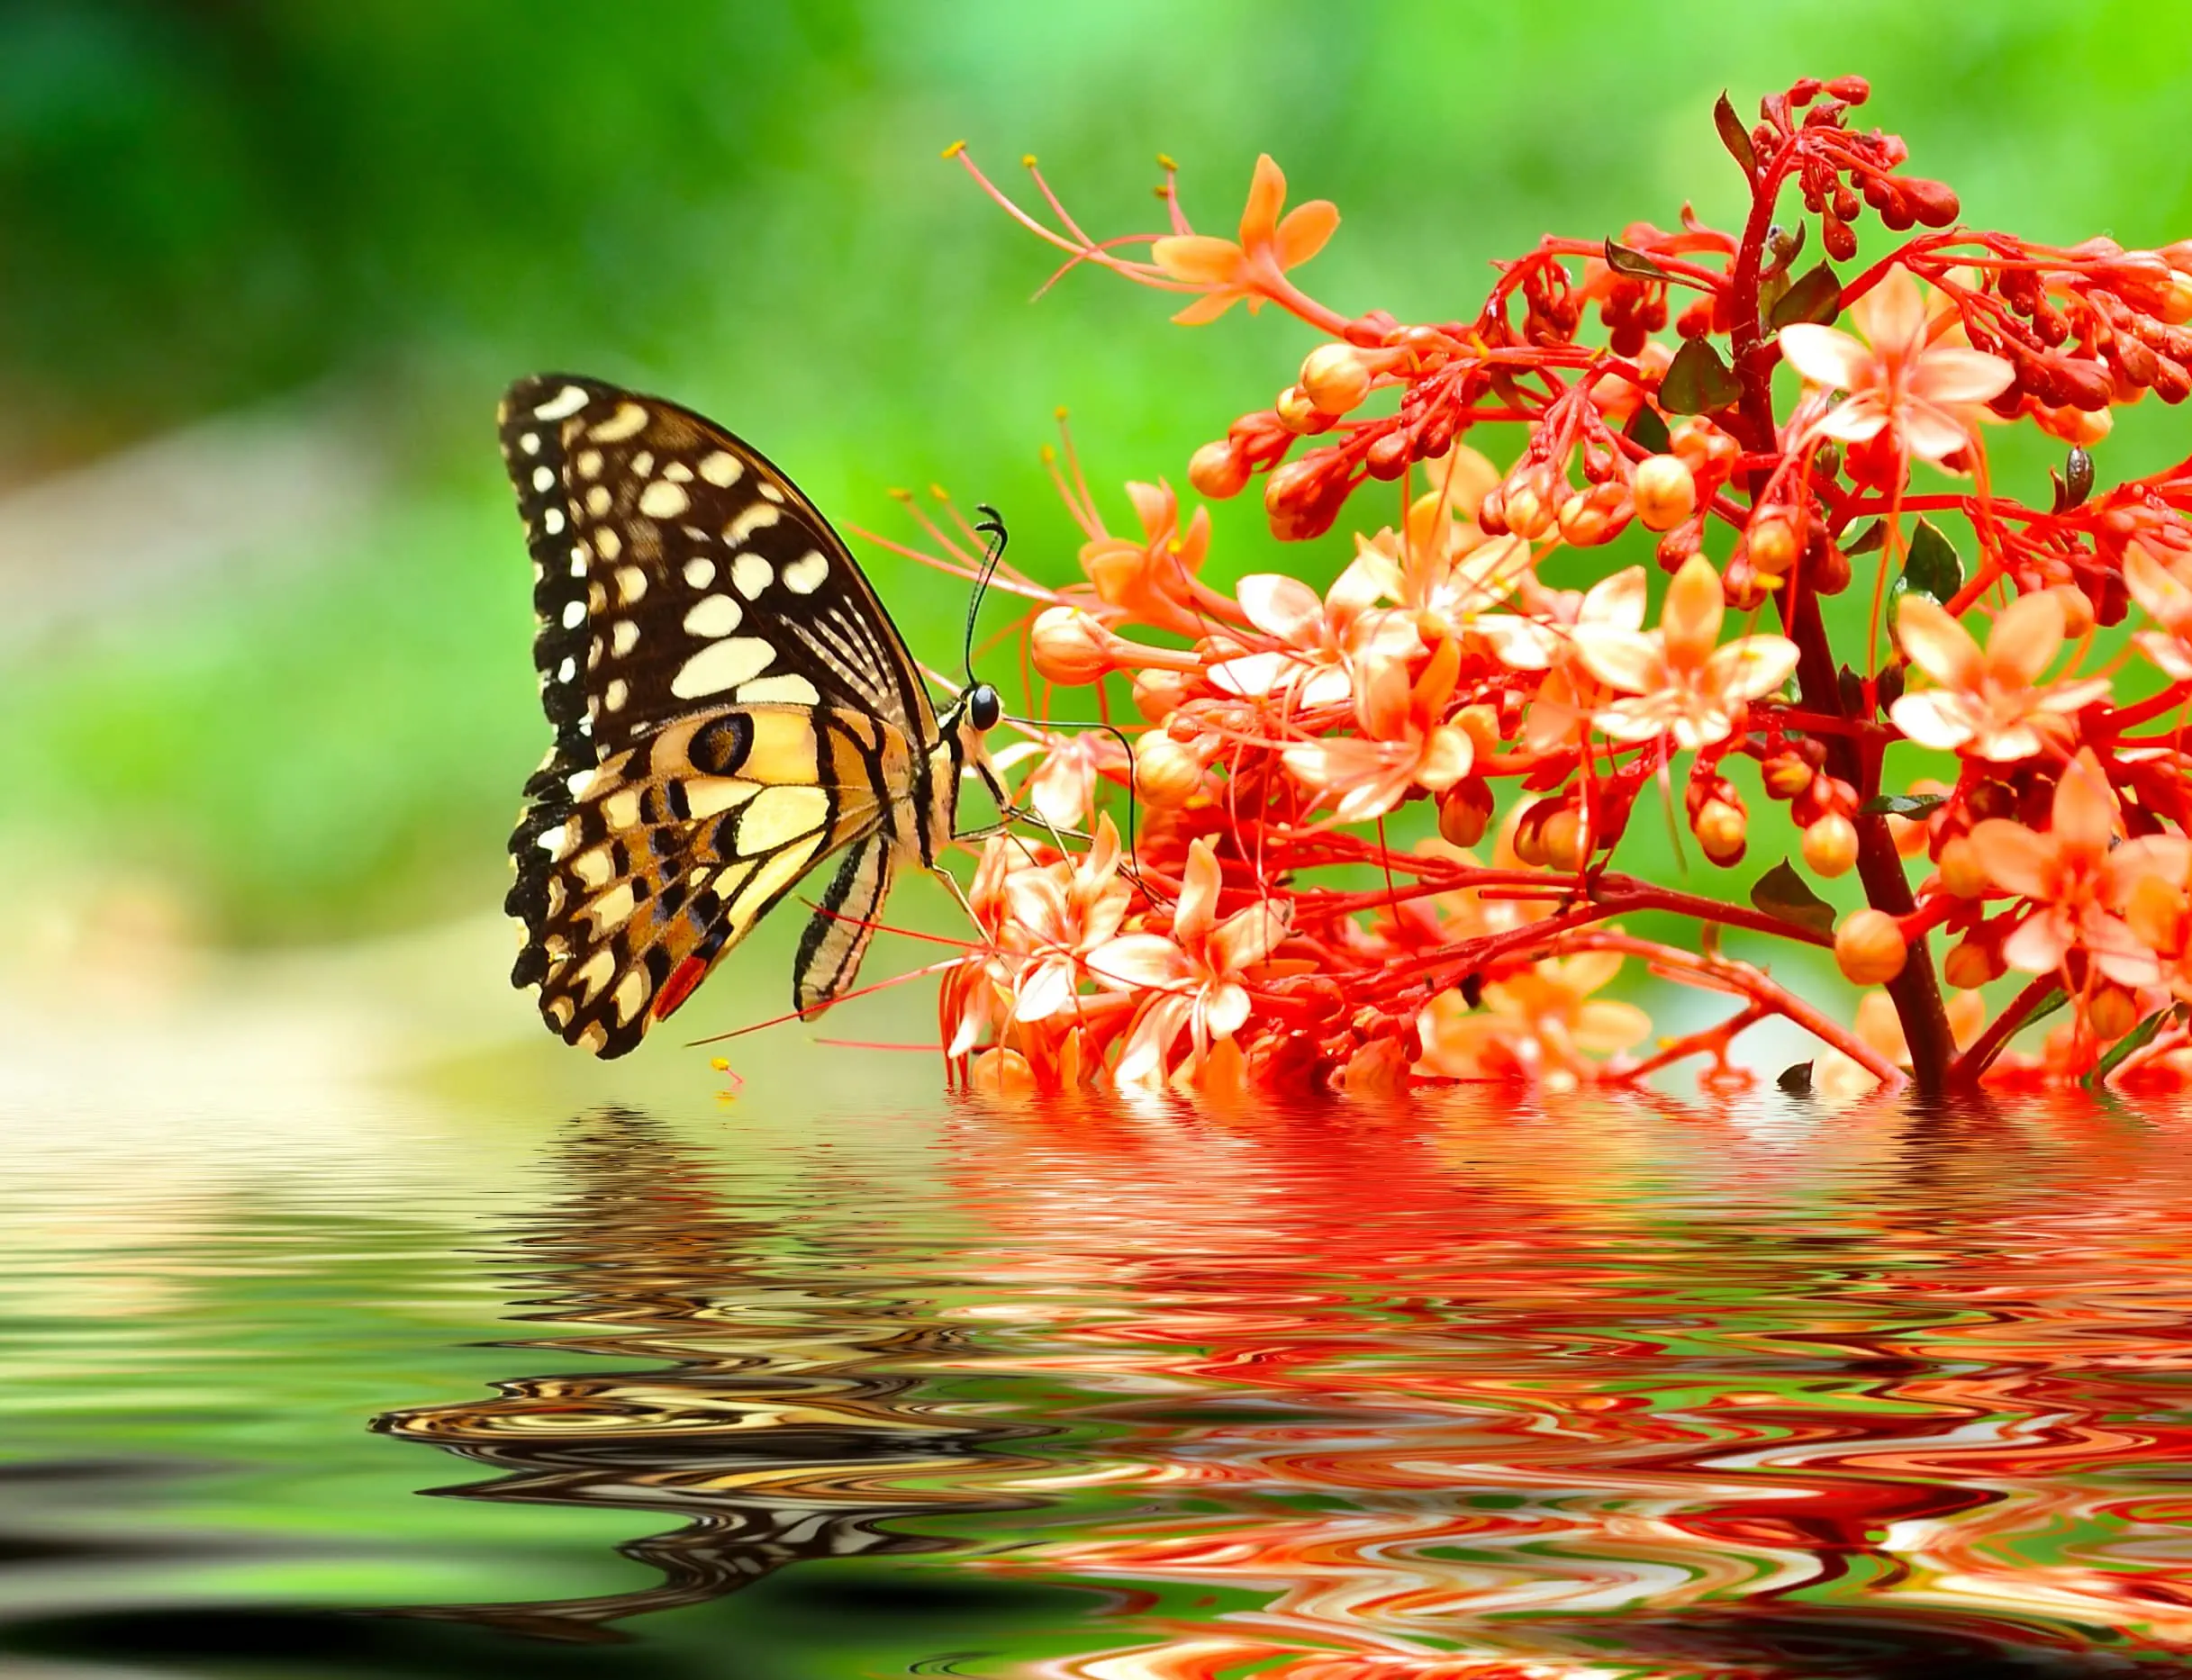 butterfly on red flower in water